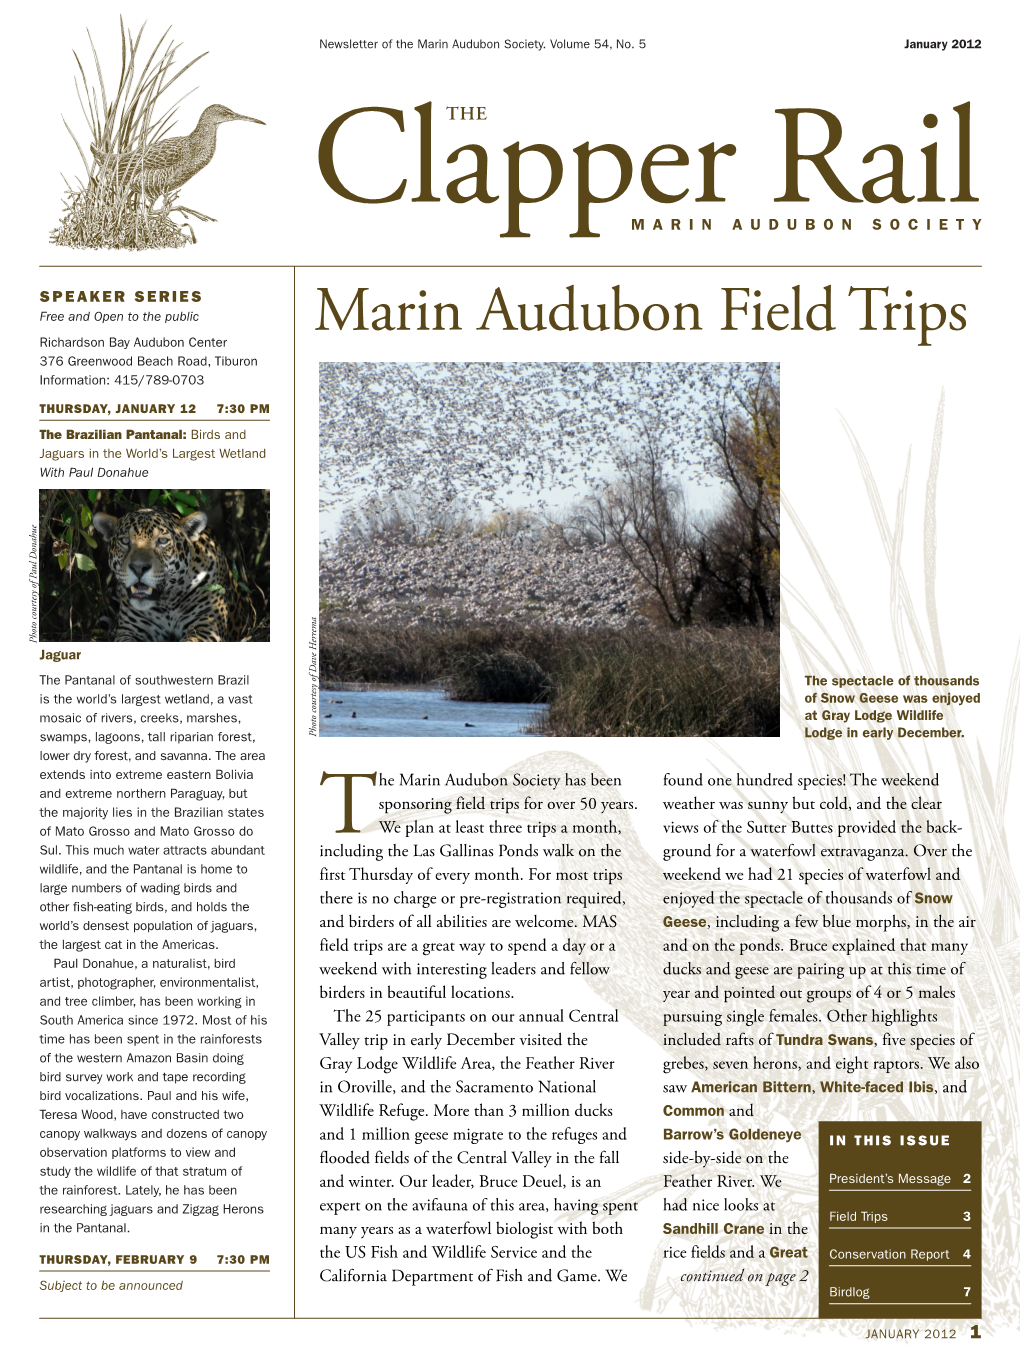 Marin Audubon Field Trips 376 Greenwood Beach Road, Tiburon Information: 415/789-0703